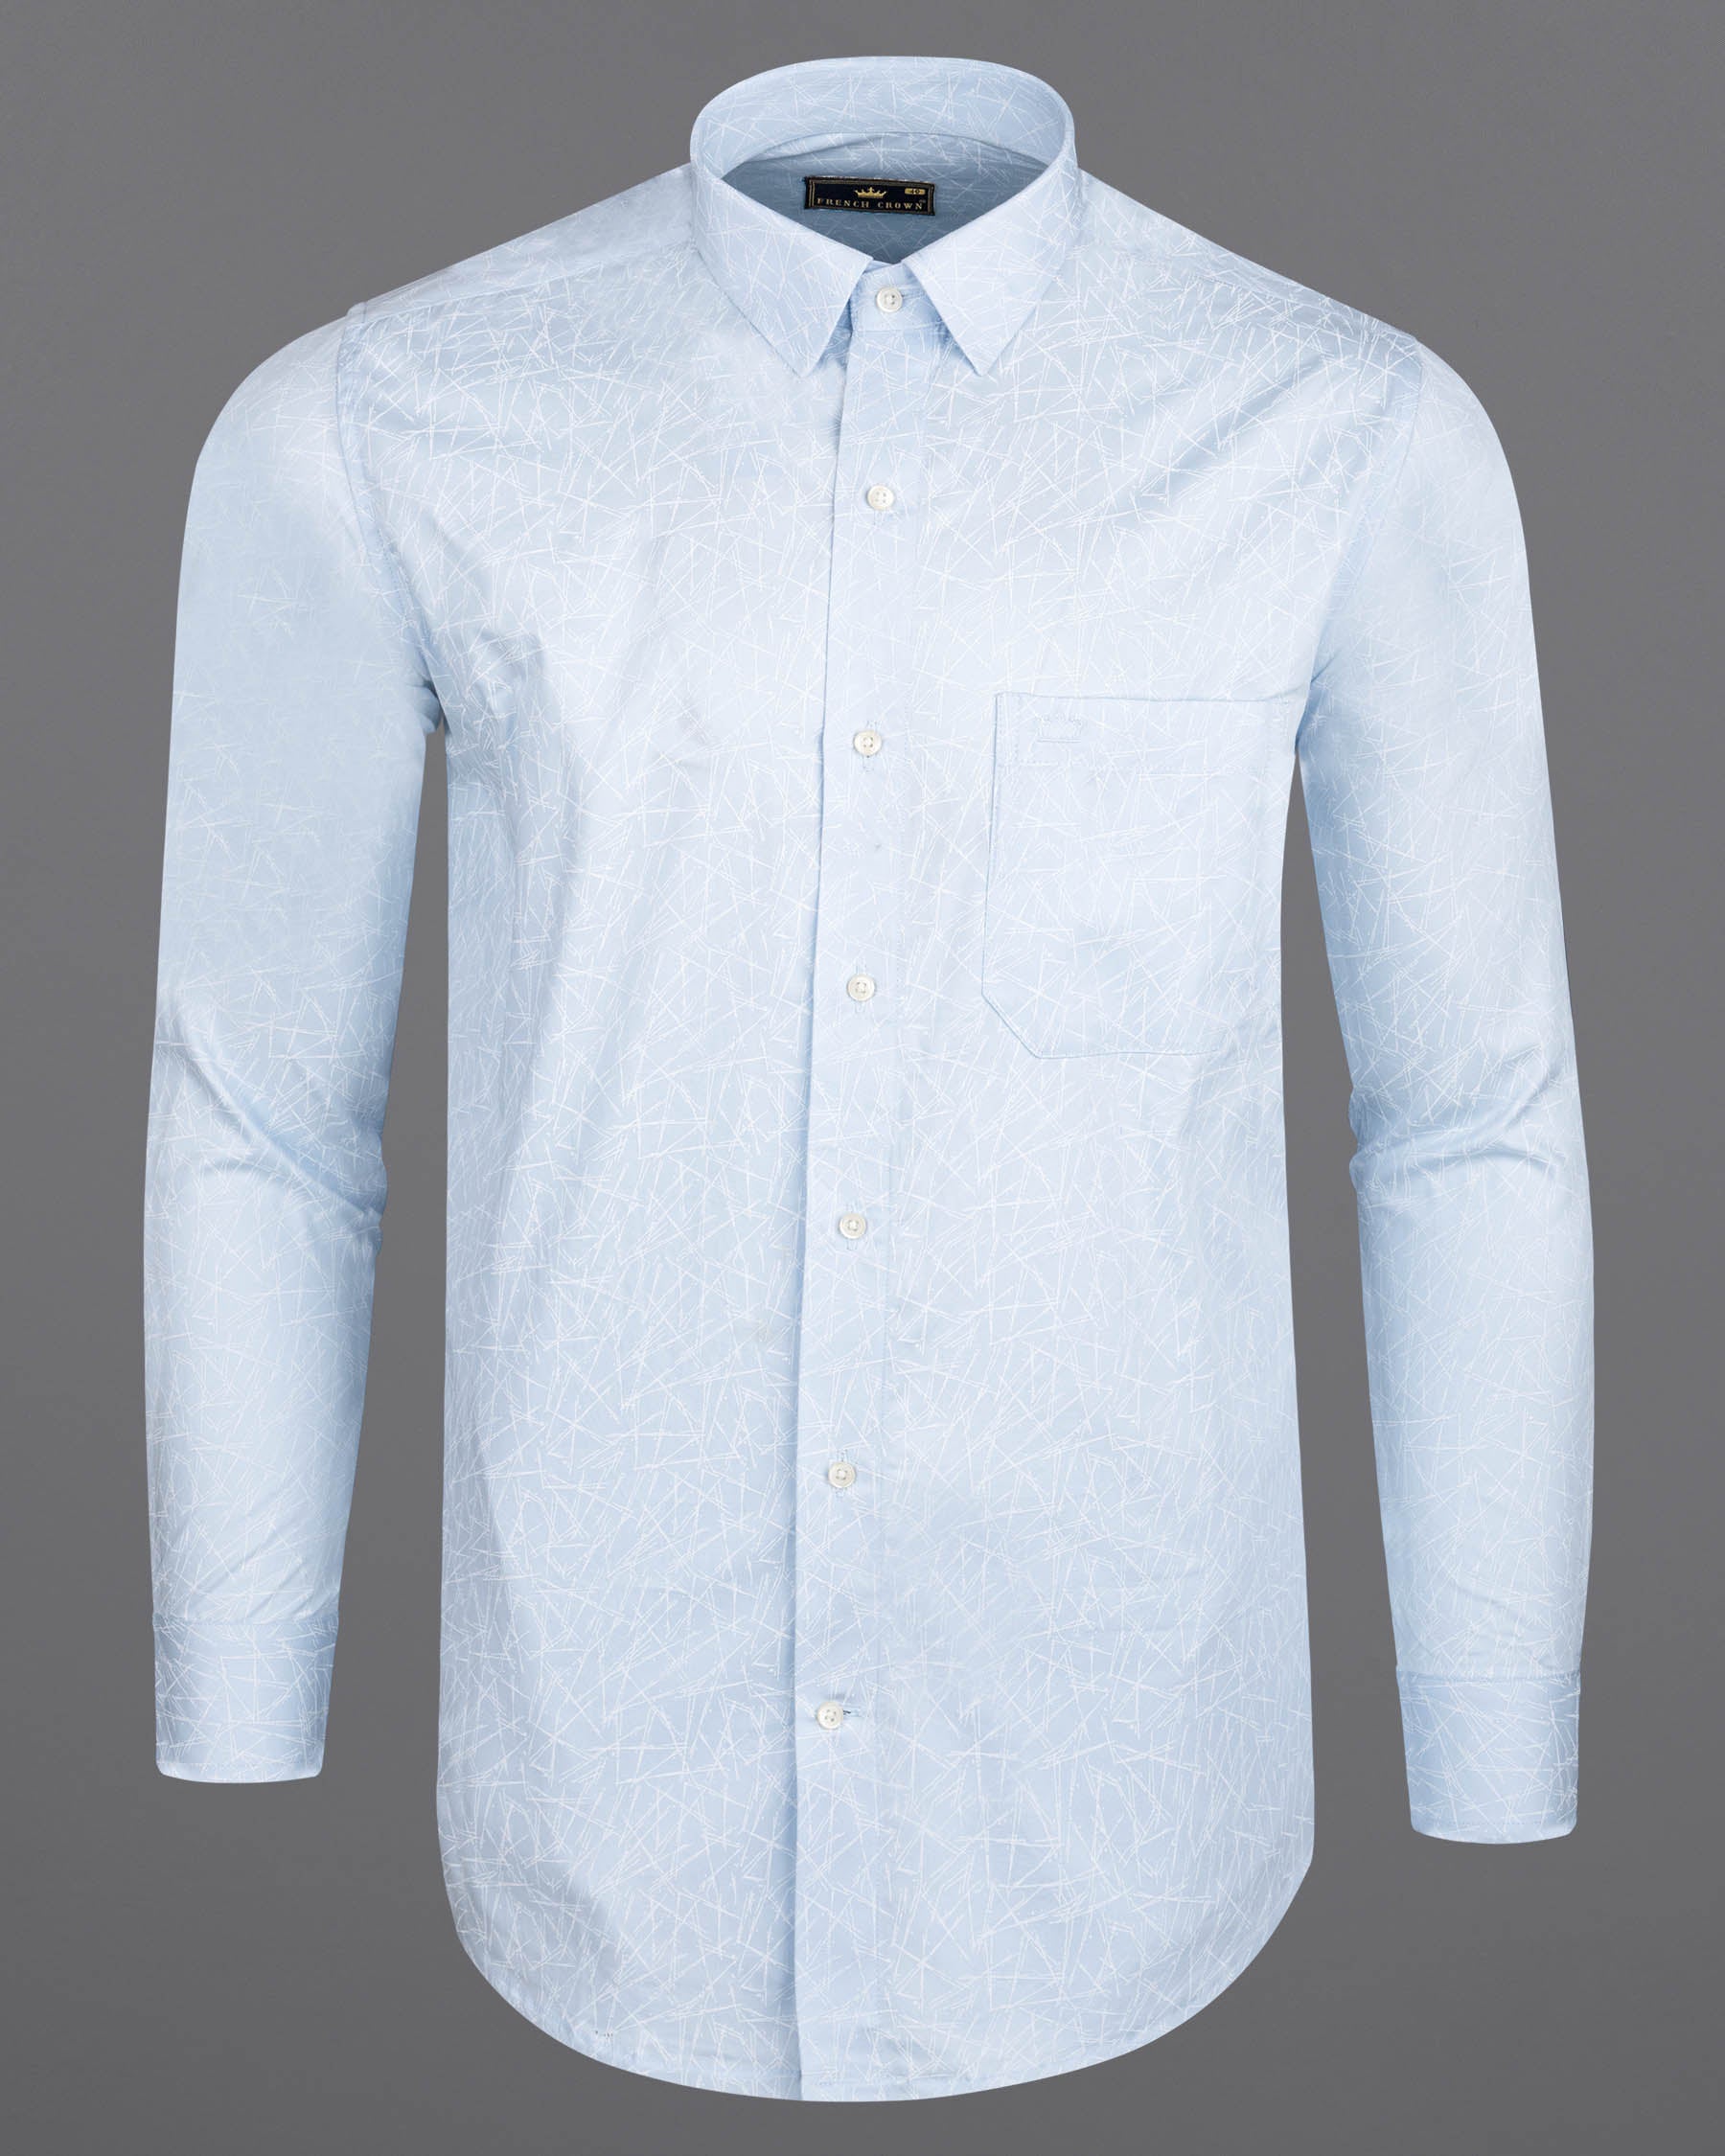 Mystic Blue Scribbled Printed Super Soft Premium Cotton Shirt 6789-38,6789-38,6789-39,6789-39,6789-40,6789-40,6789-42,6789-42,6789-44,6789-44,6789-46,6789-46,6789-48,6789-48,6789-50,6789-50,6789-52,6789-52